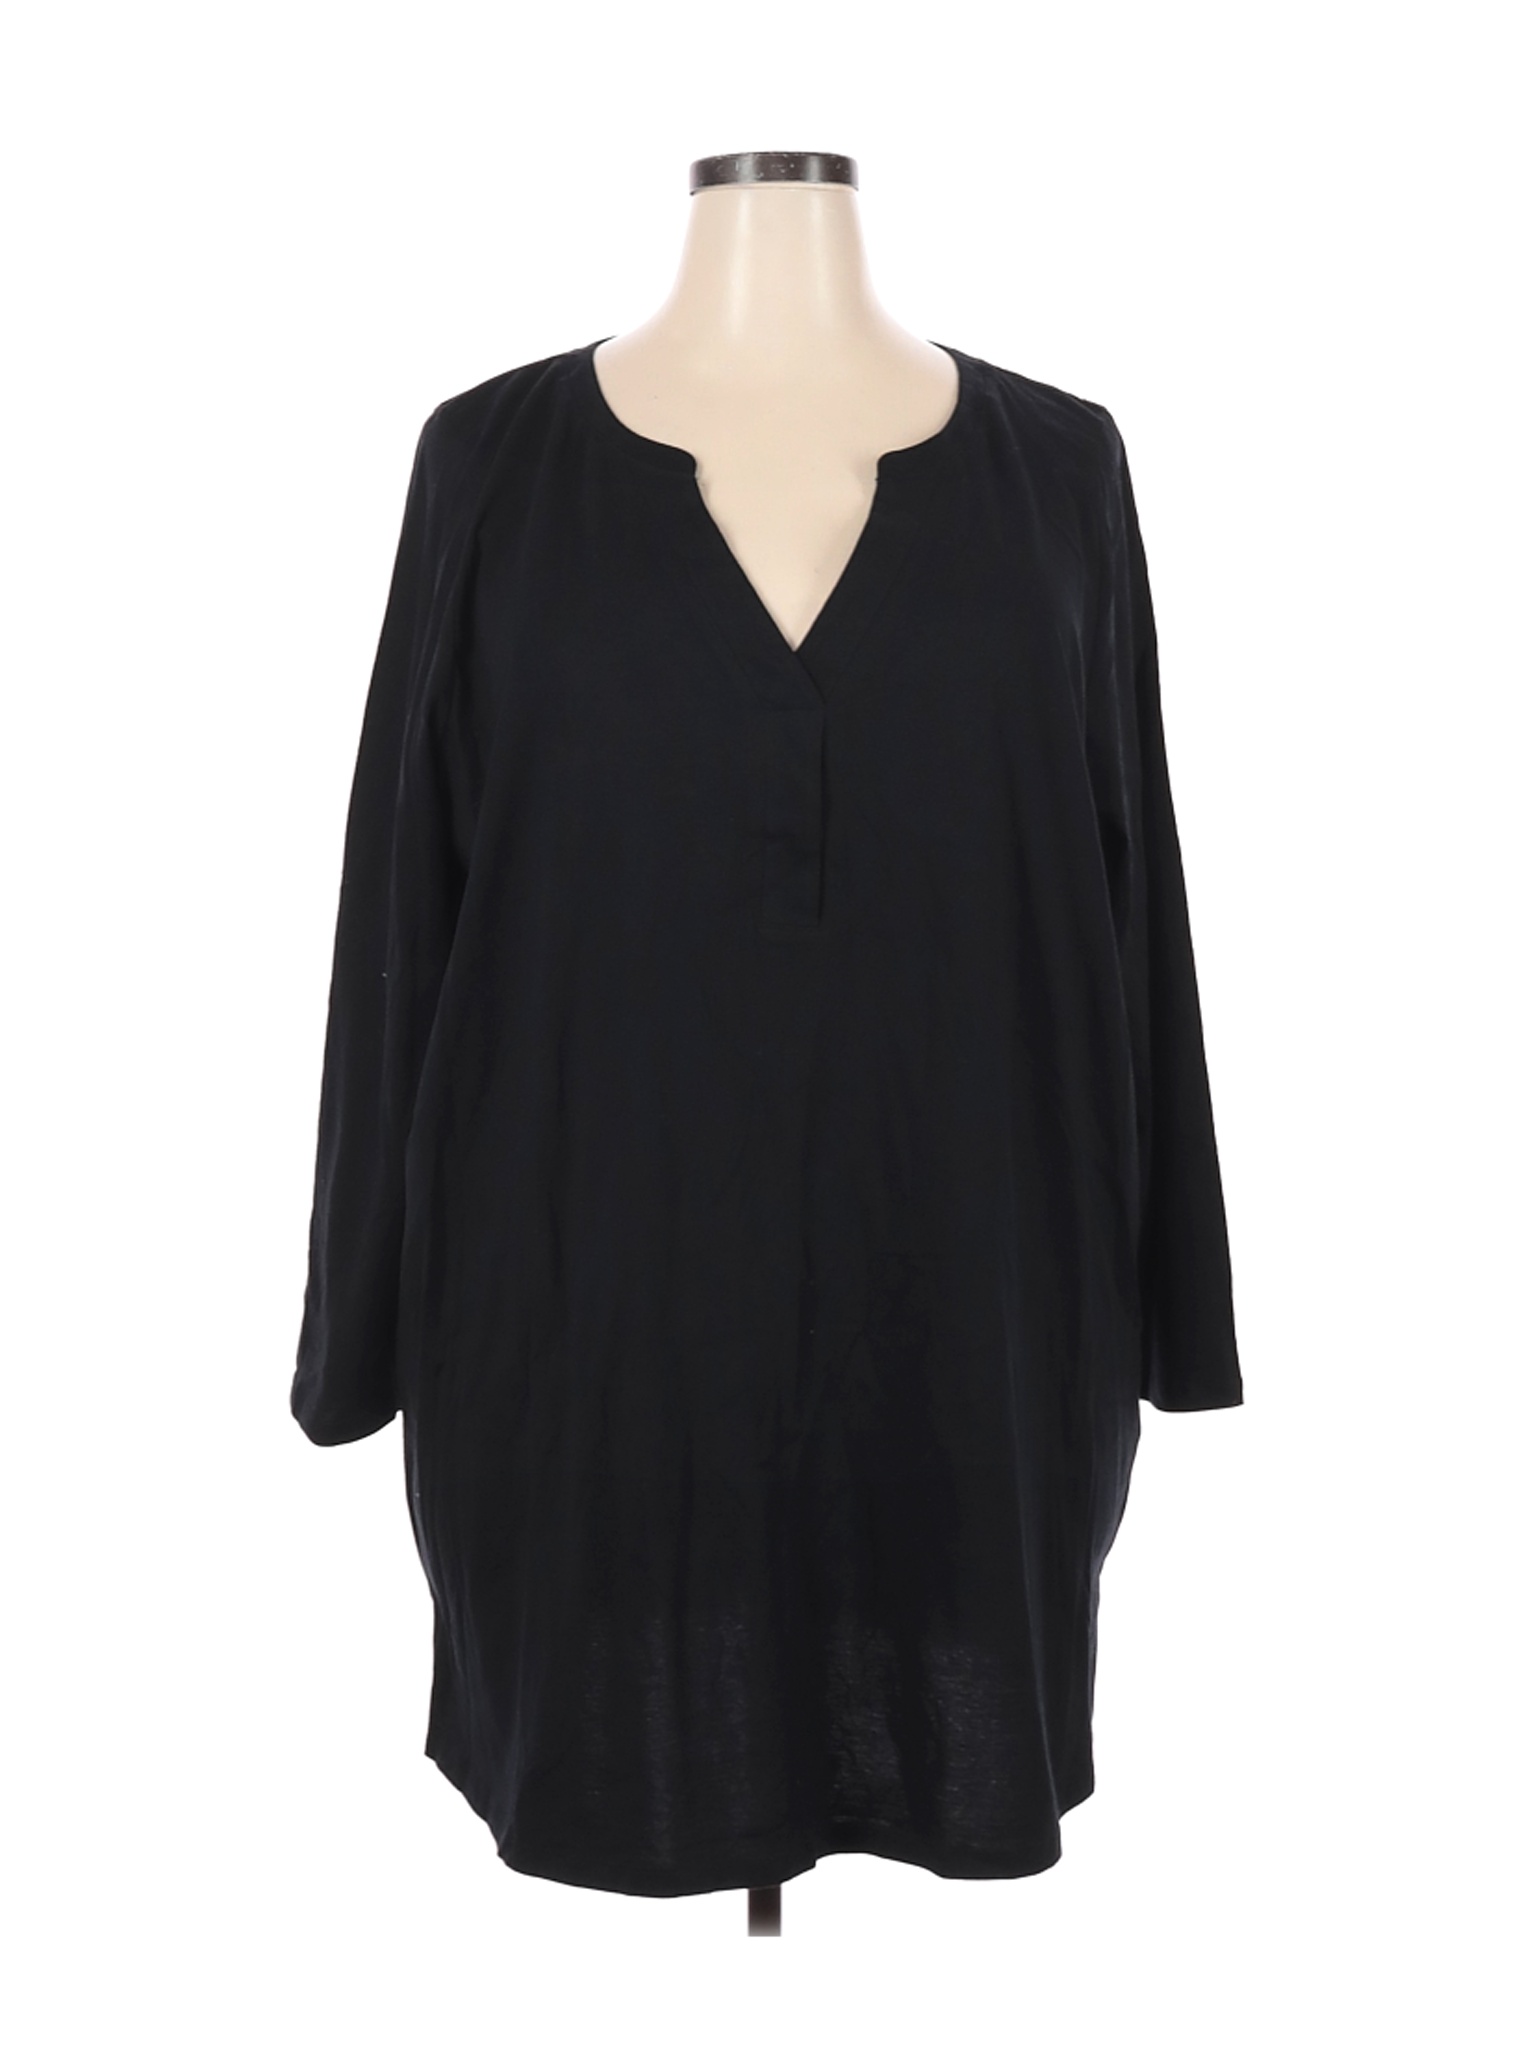 Roaman's Women Black Casual Dress 26 Plus | eBay